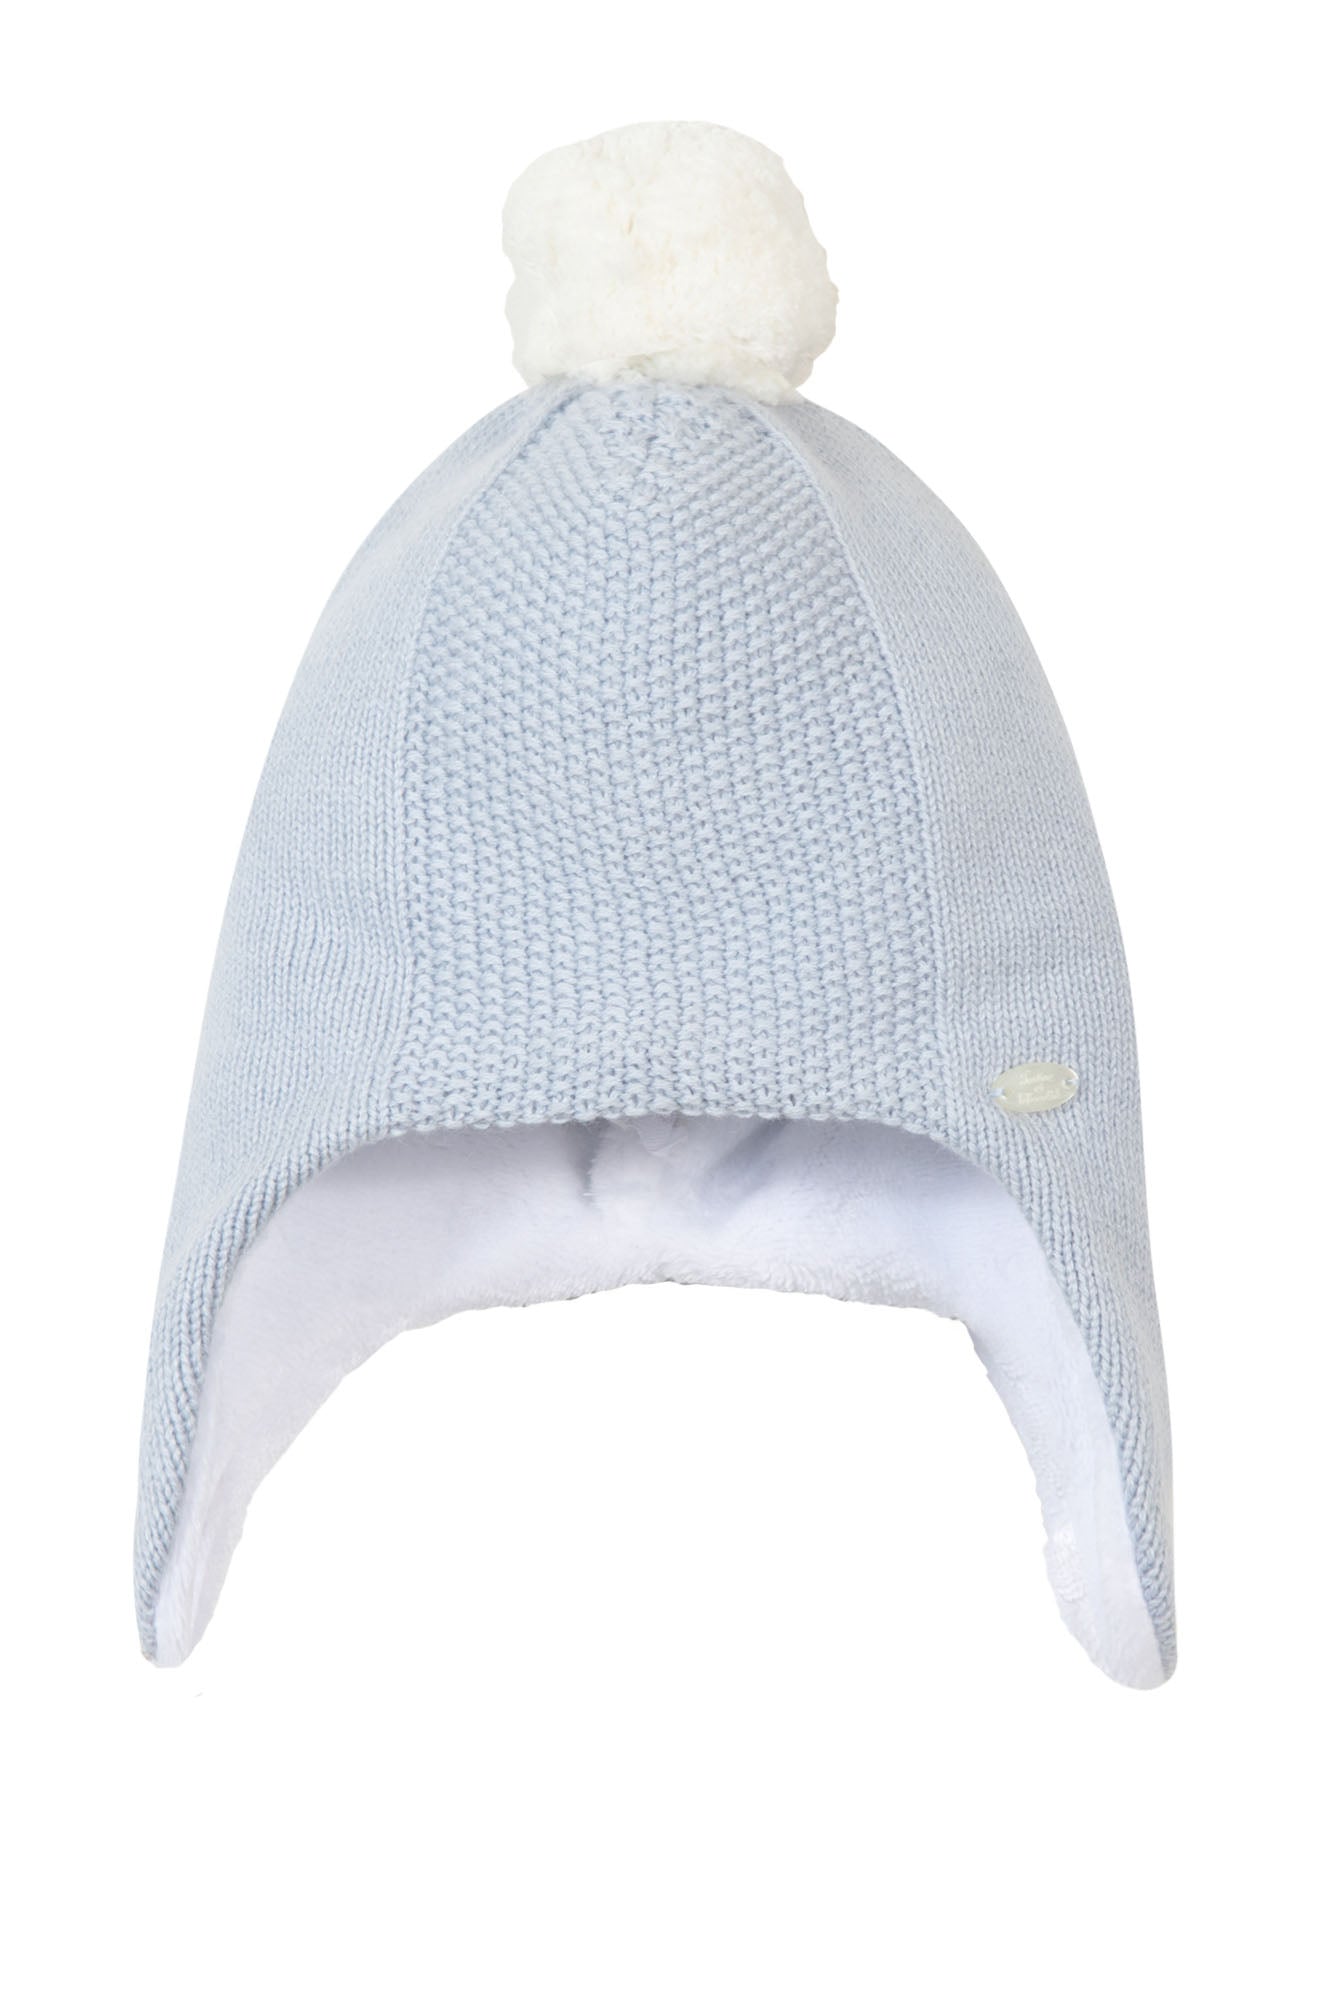 Hat - Pale Blue Knit with PomPom Grey Blue / T2